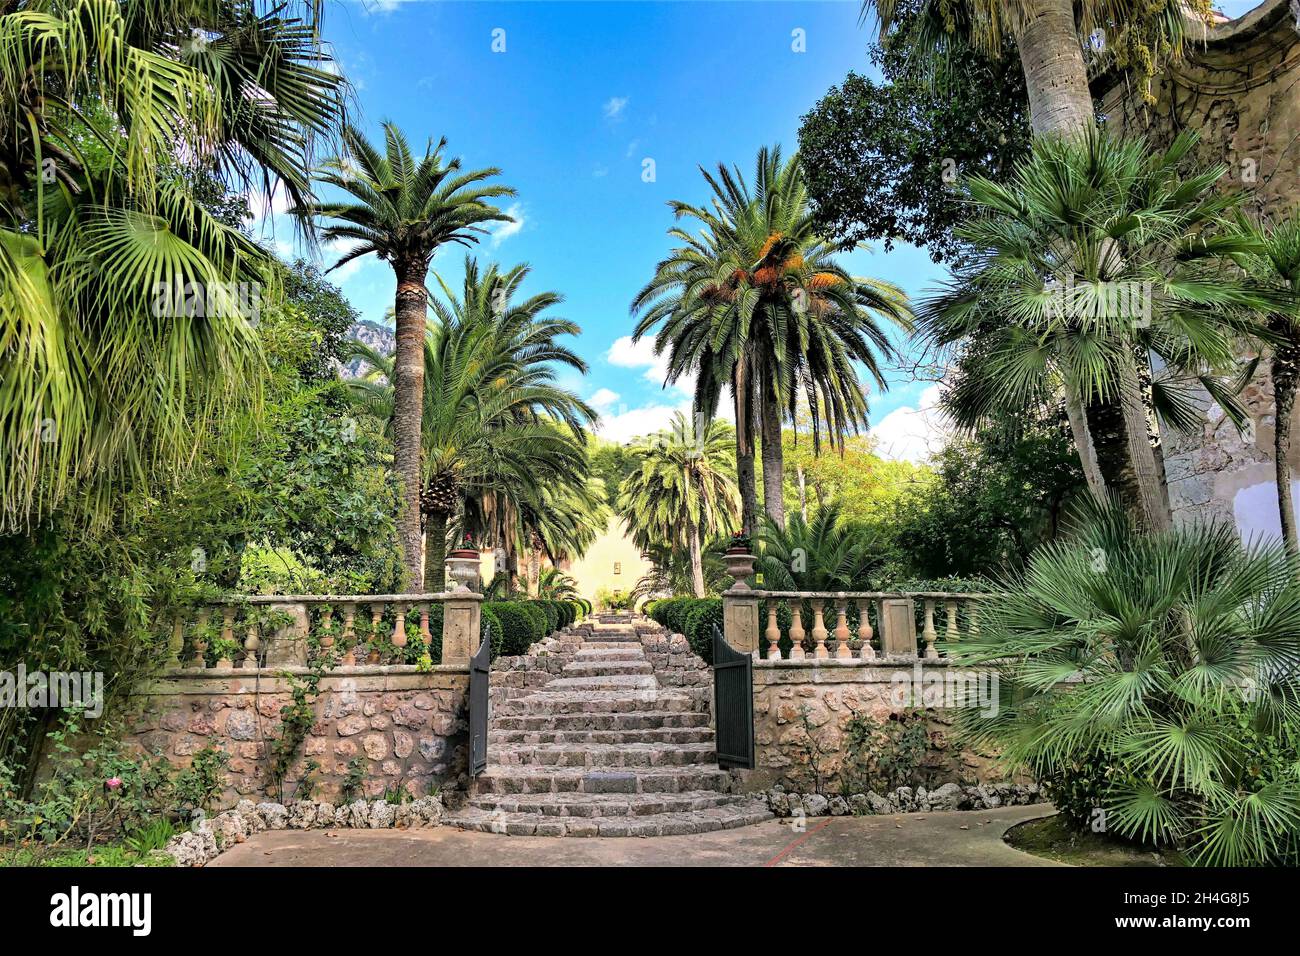 Palmen Garten Spanien Mallorca Bilder Stock Photo